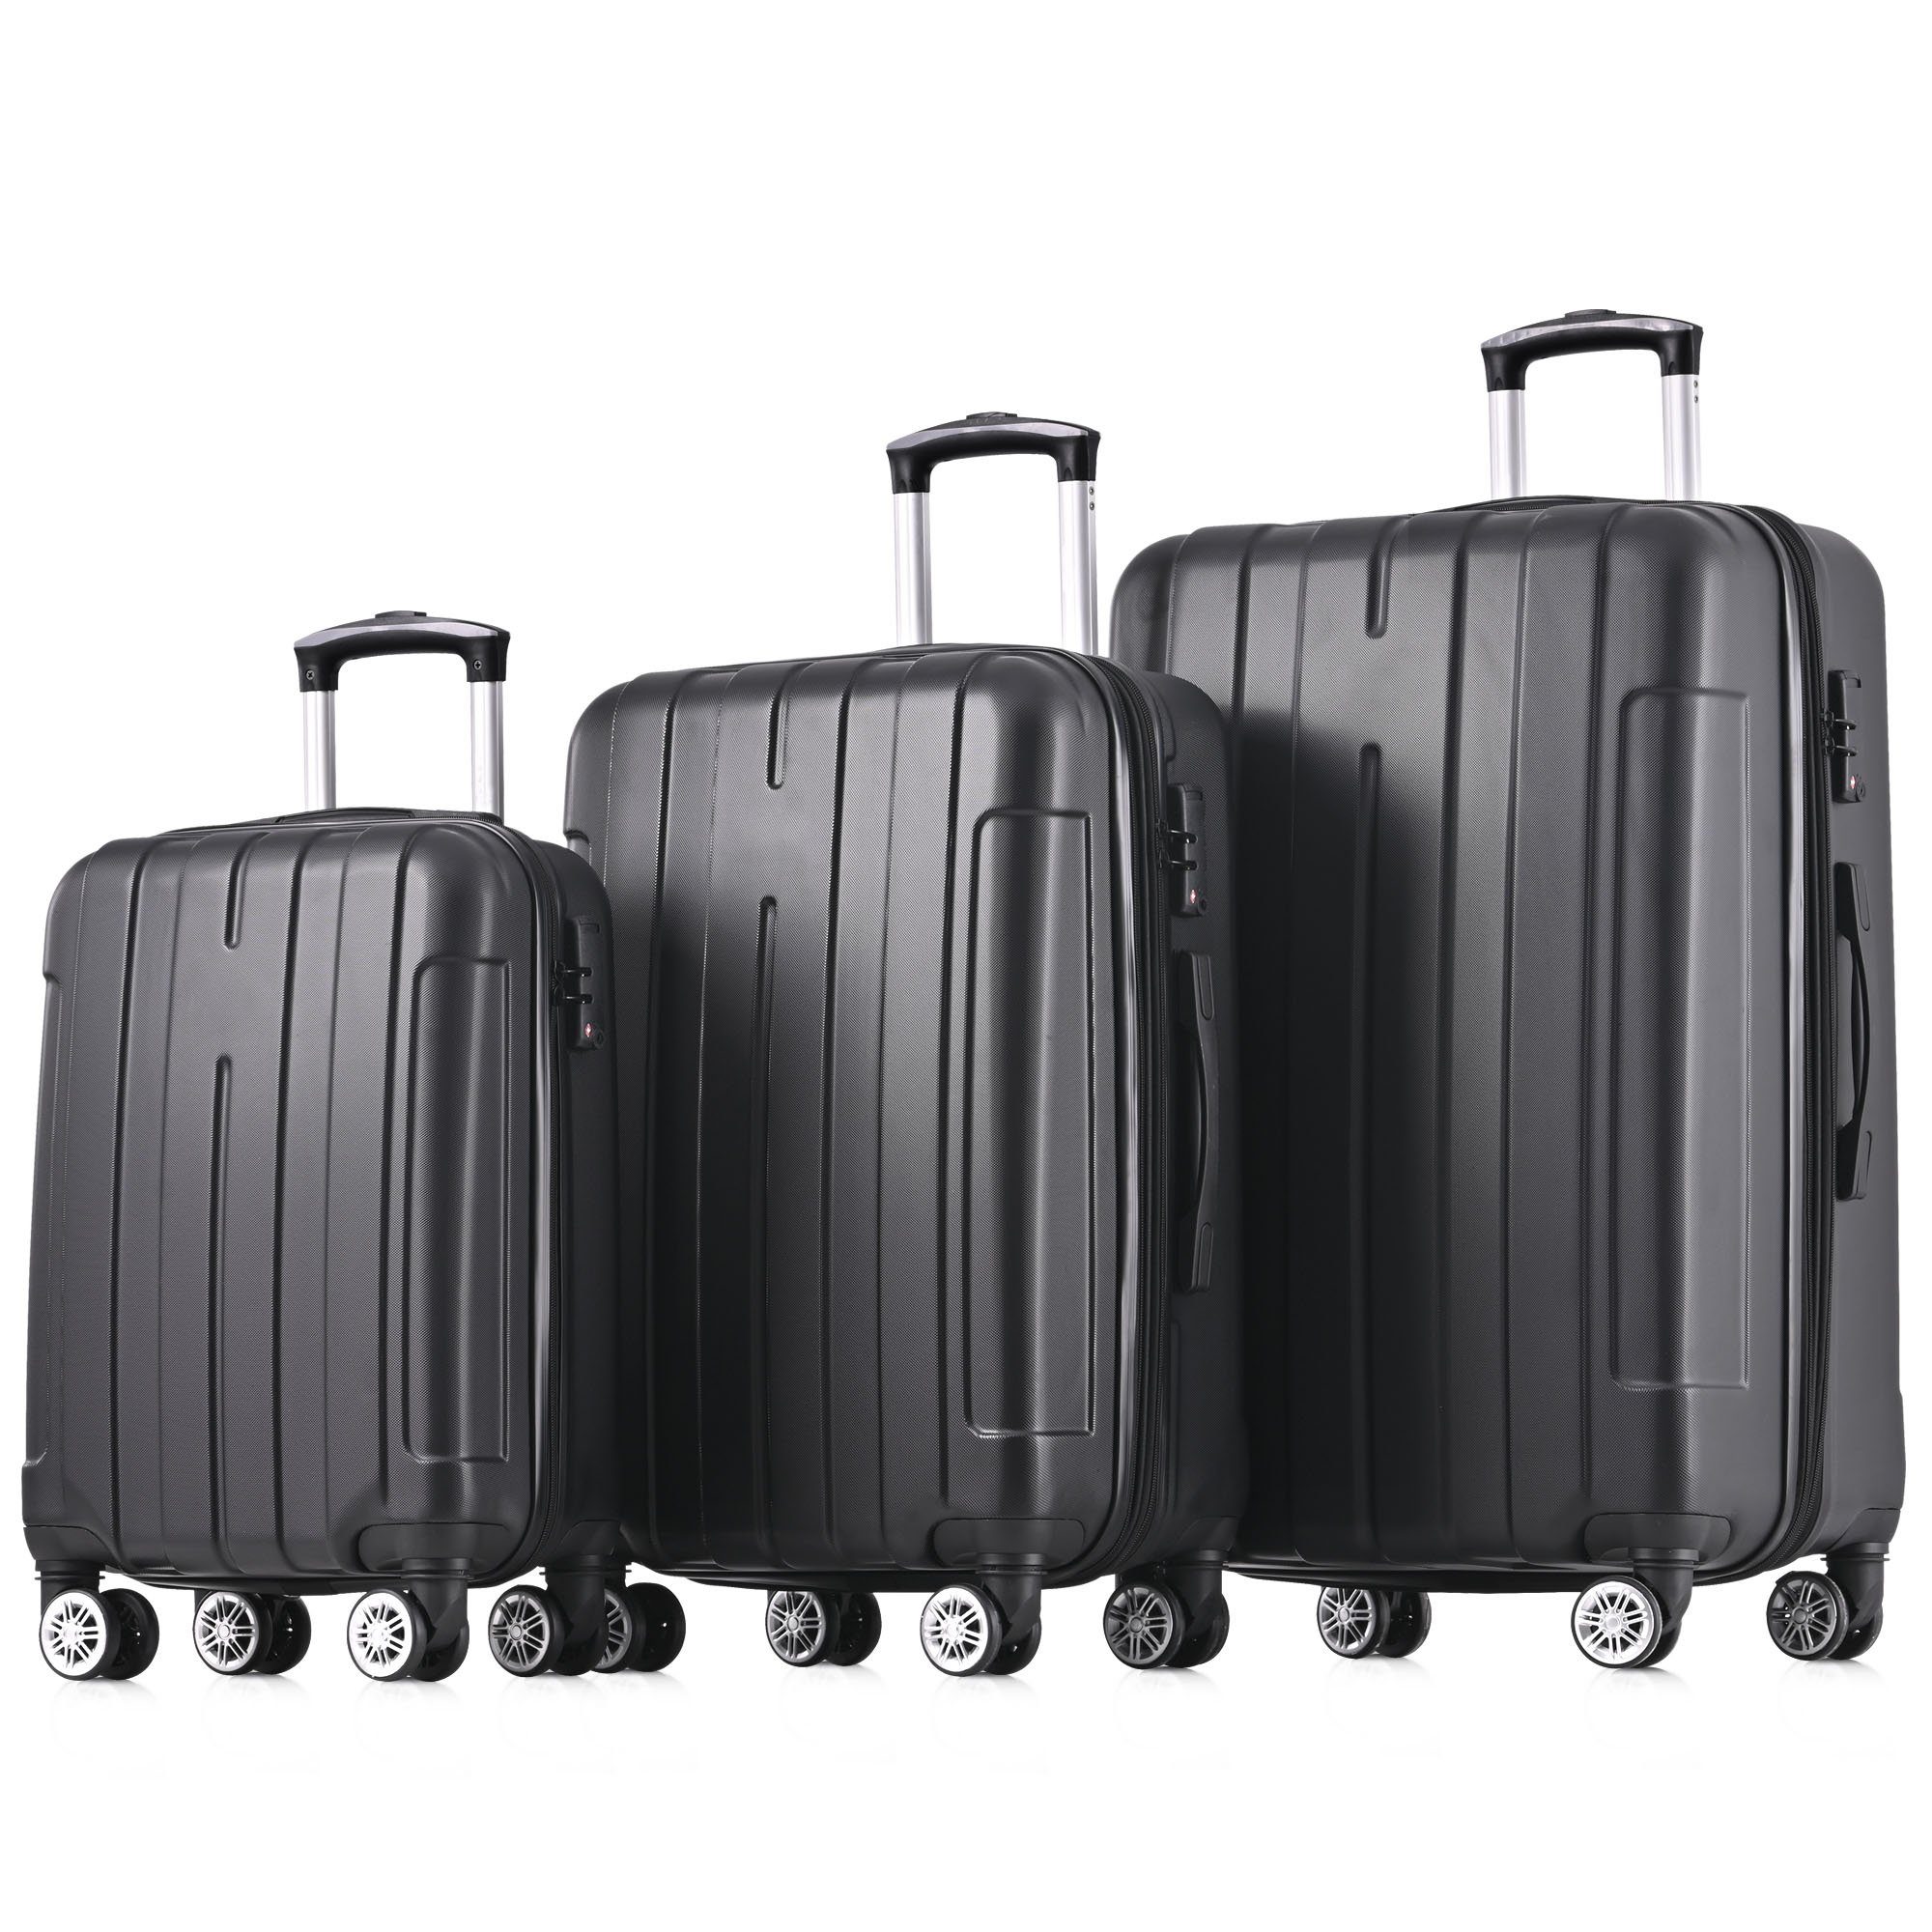 Odikalo Handgepäckkoffer Handgepäck, viele TSA-Schloss, Universalrad, M-L-XL-Set, Farbe schwarz